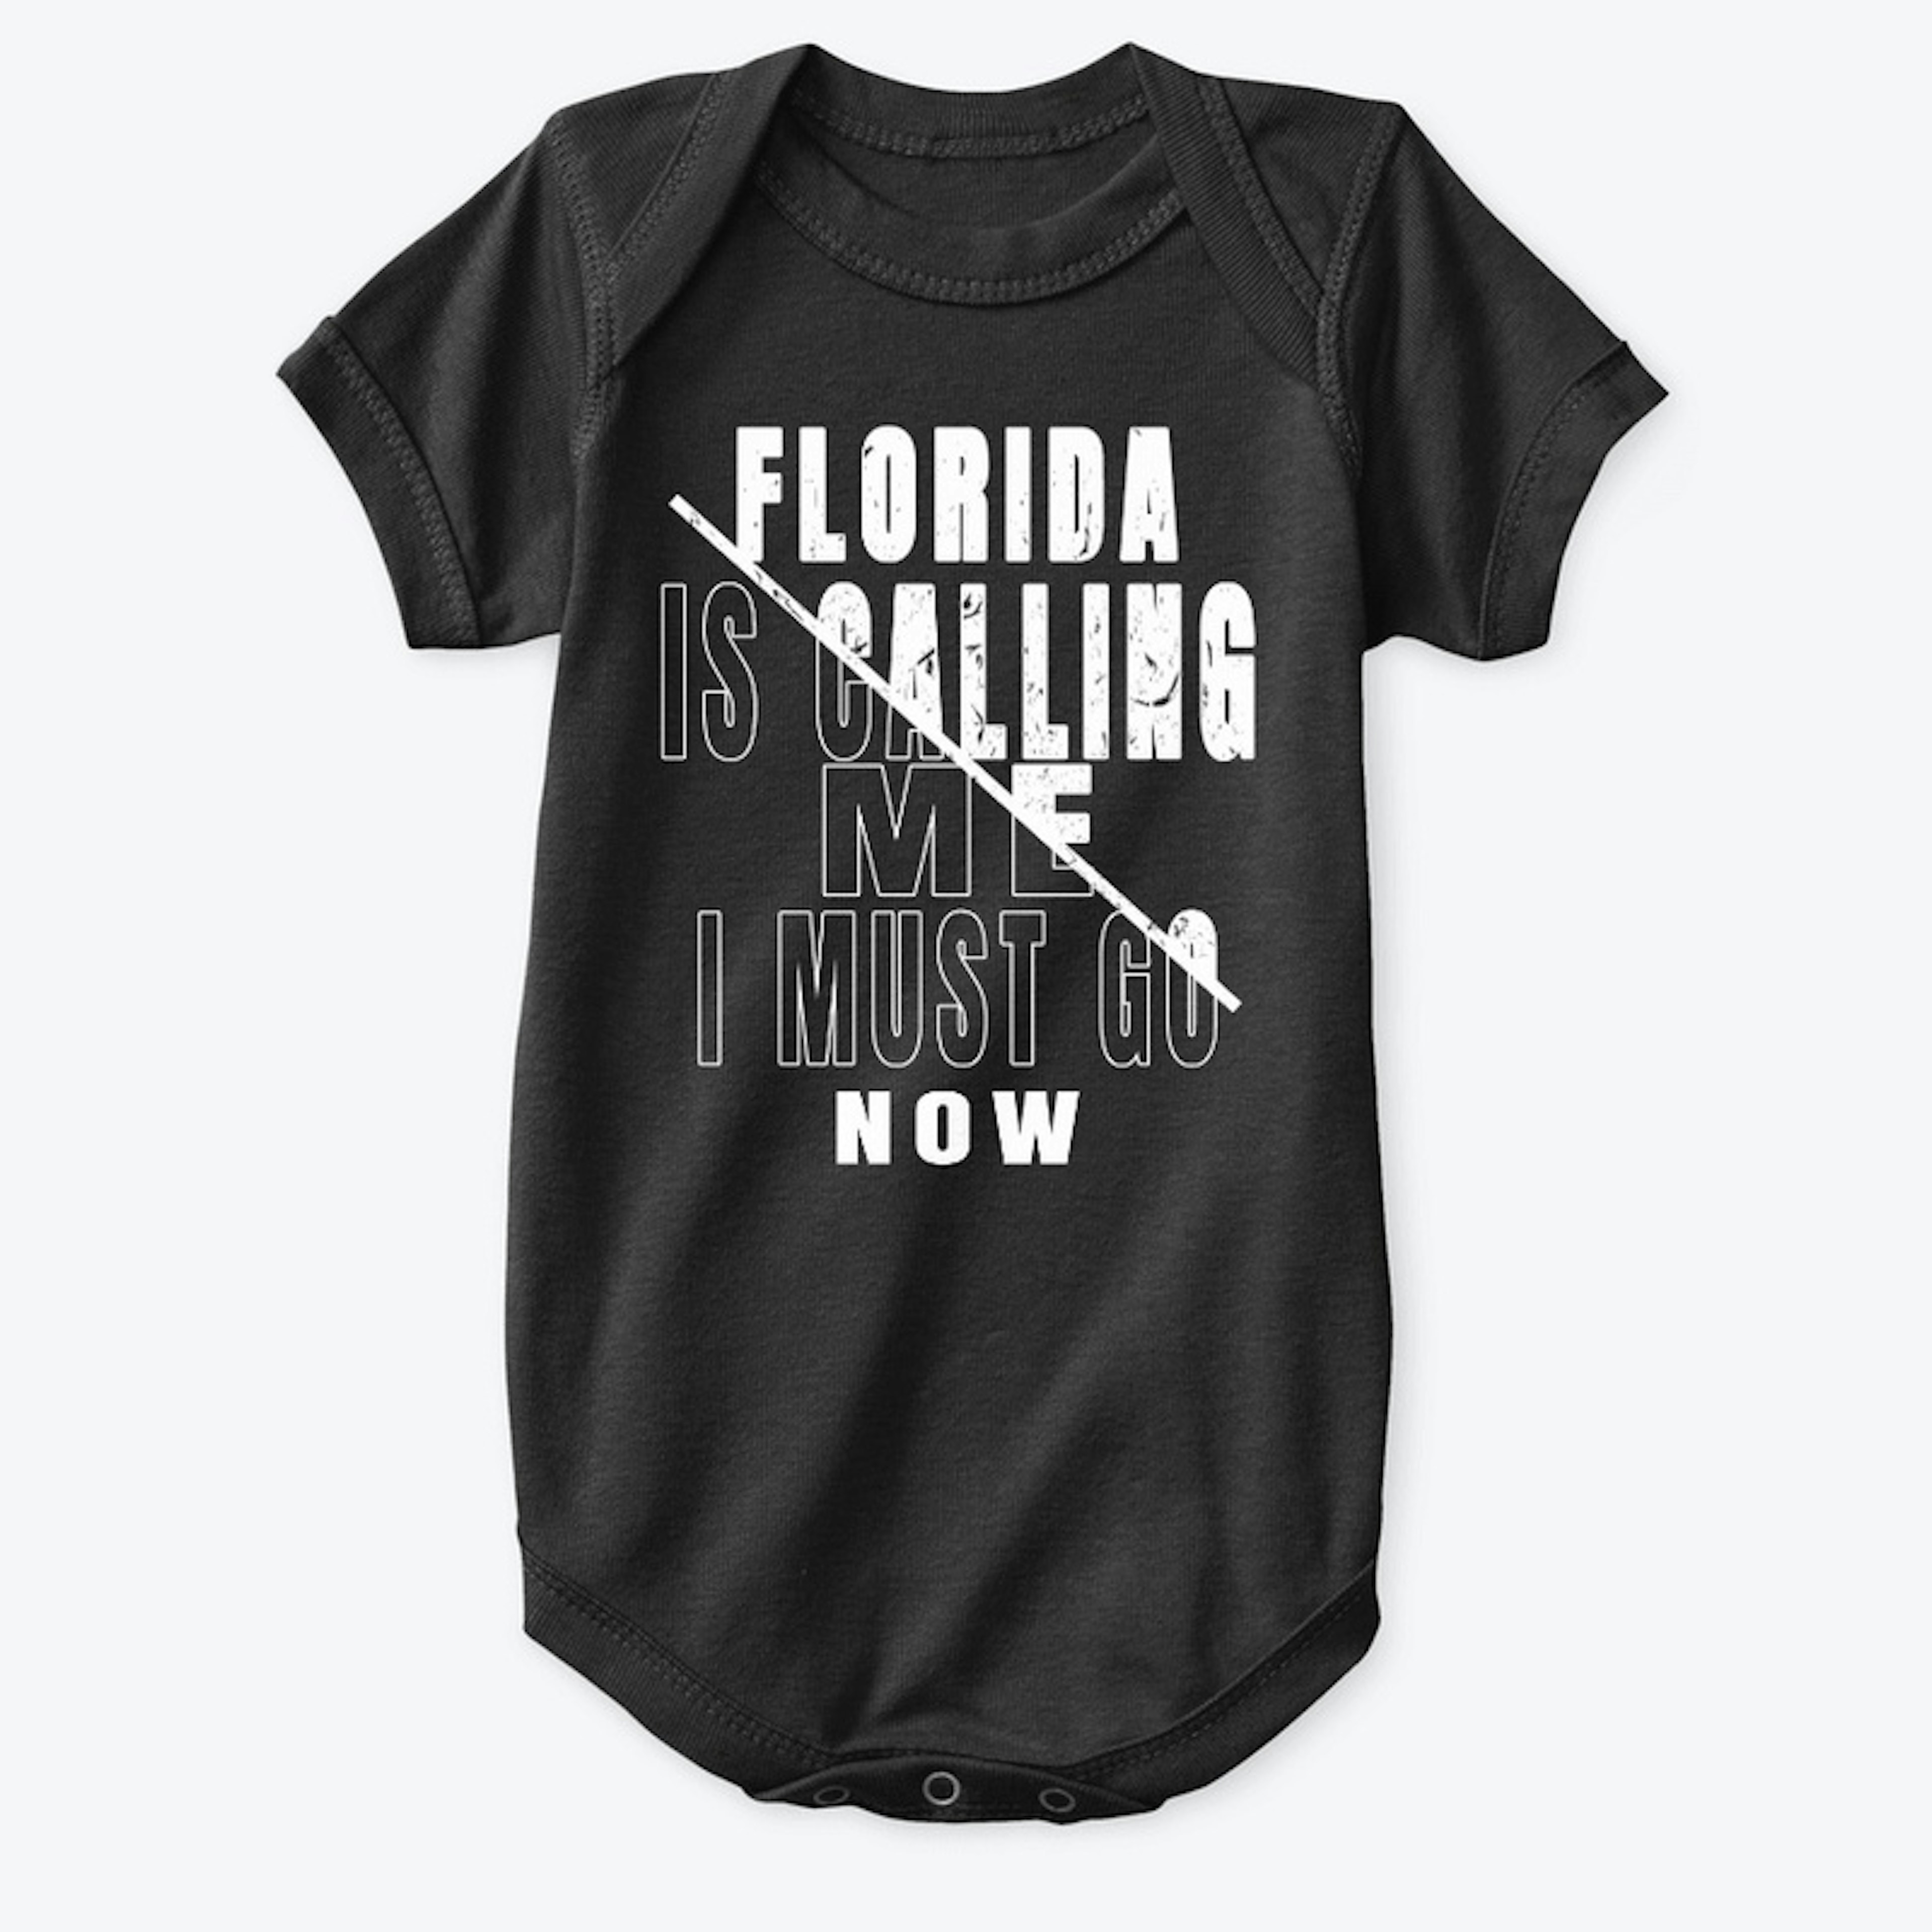 Florida Is Calling Me T-Shirt